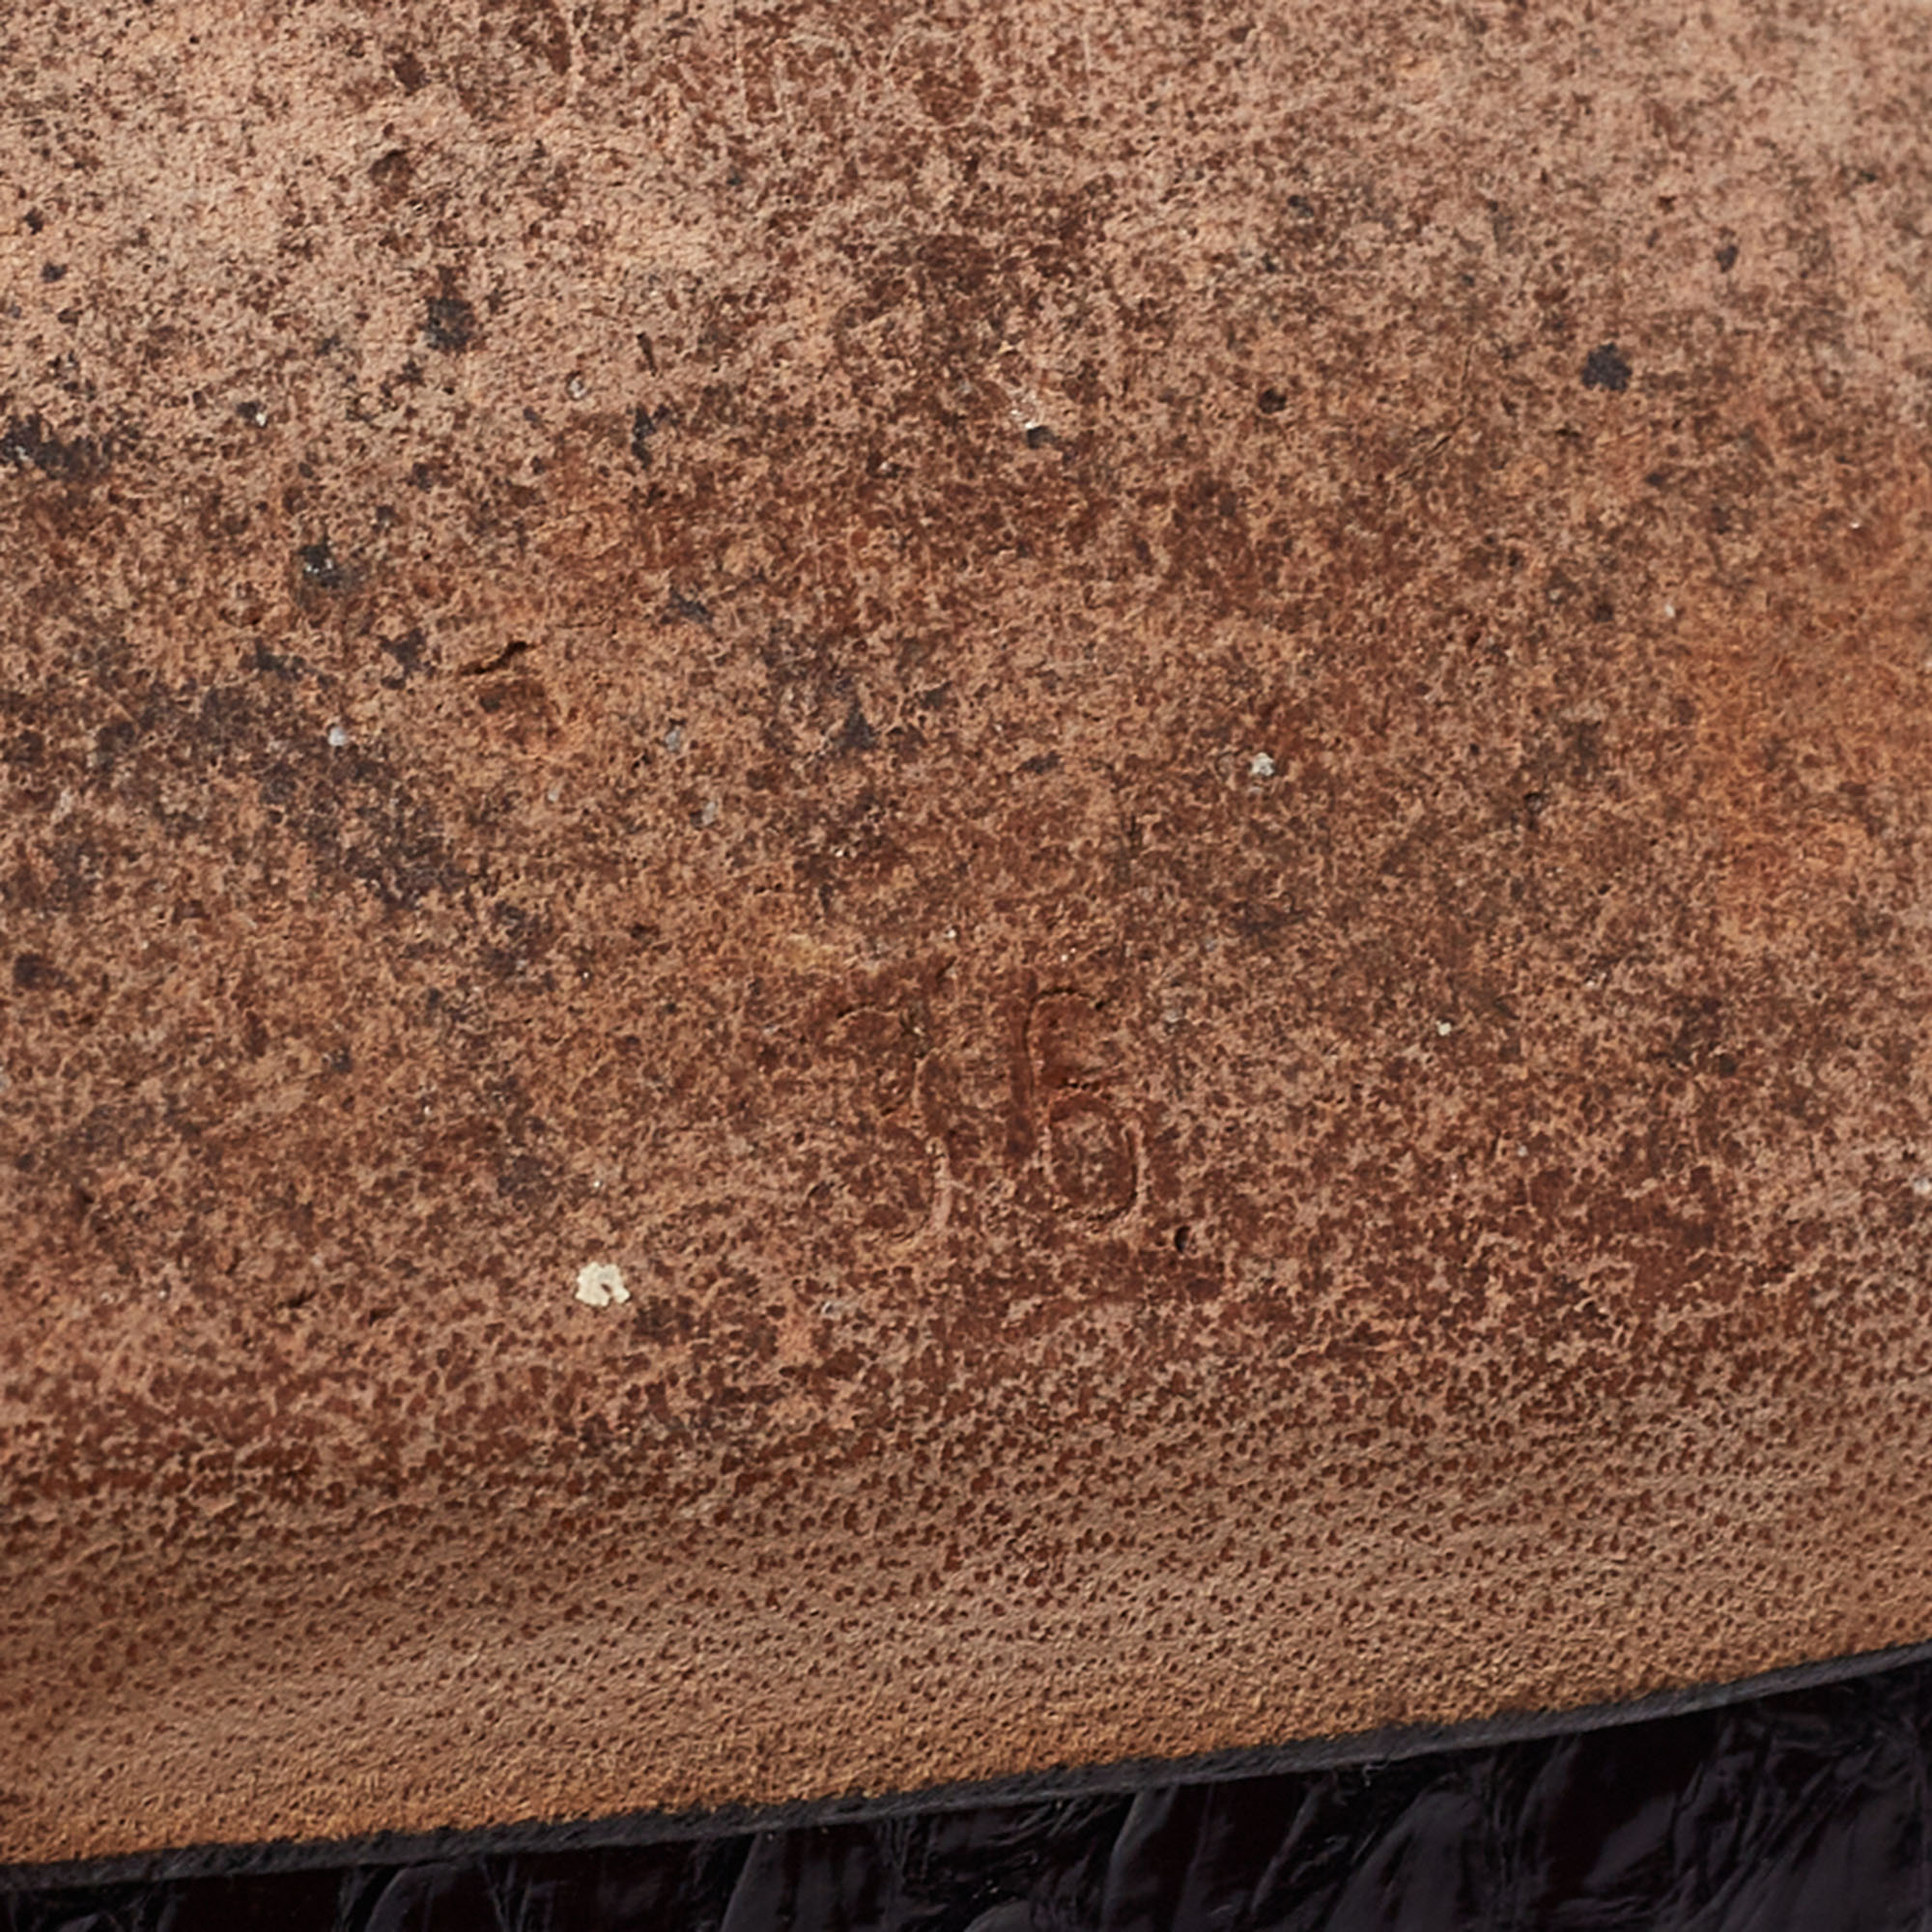 Jimmy Choo Black Woven Leather Platform Slingback Sandals Size 36